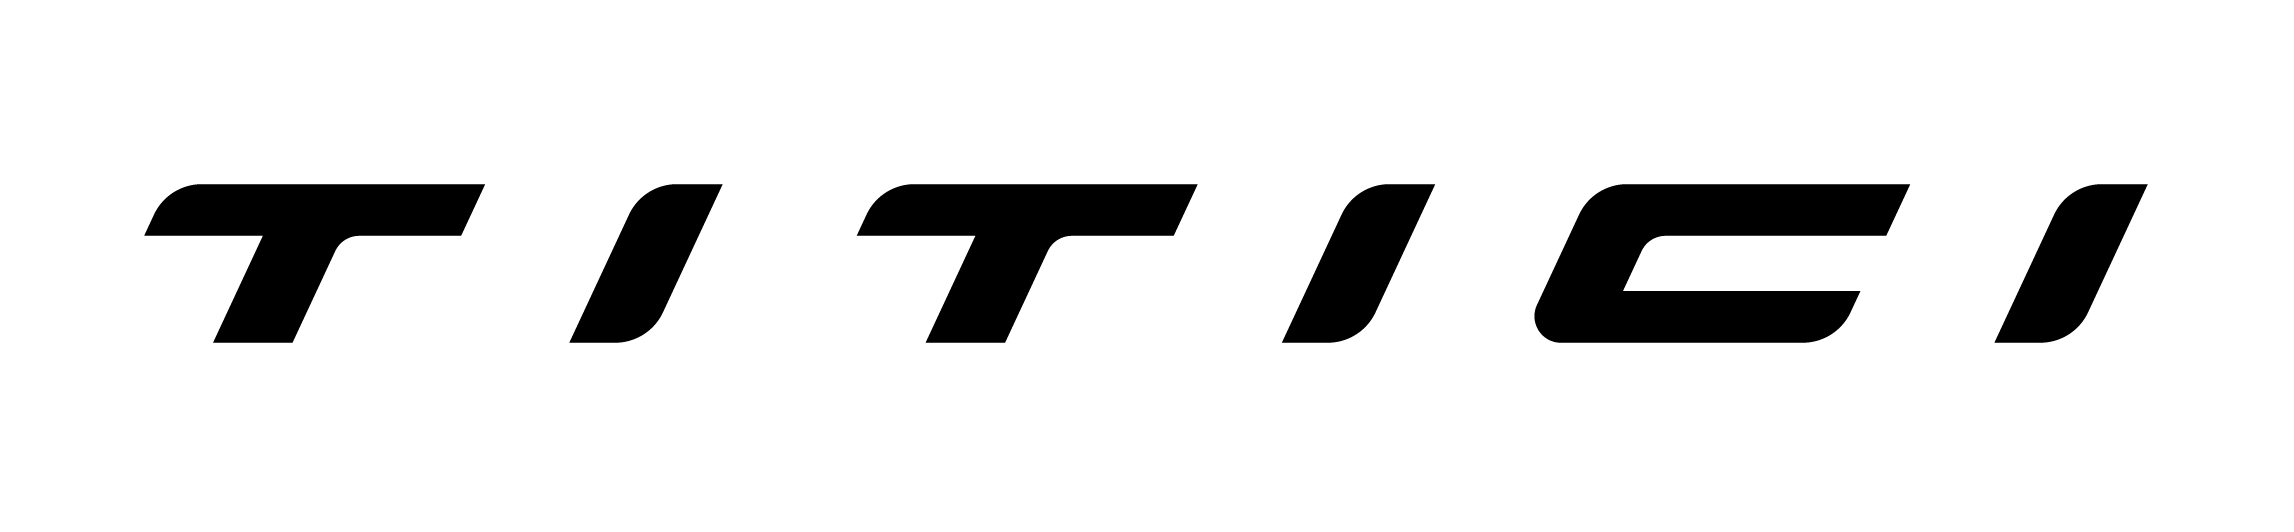 TITICI_logo-01